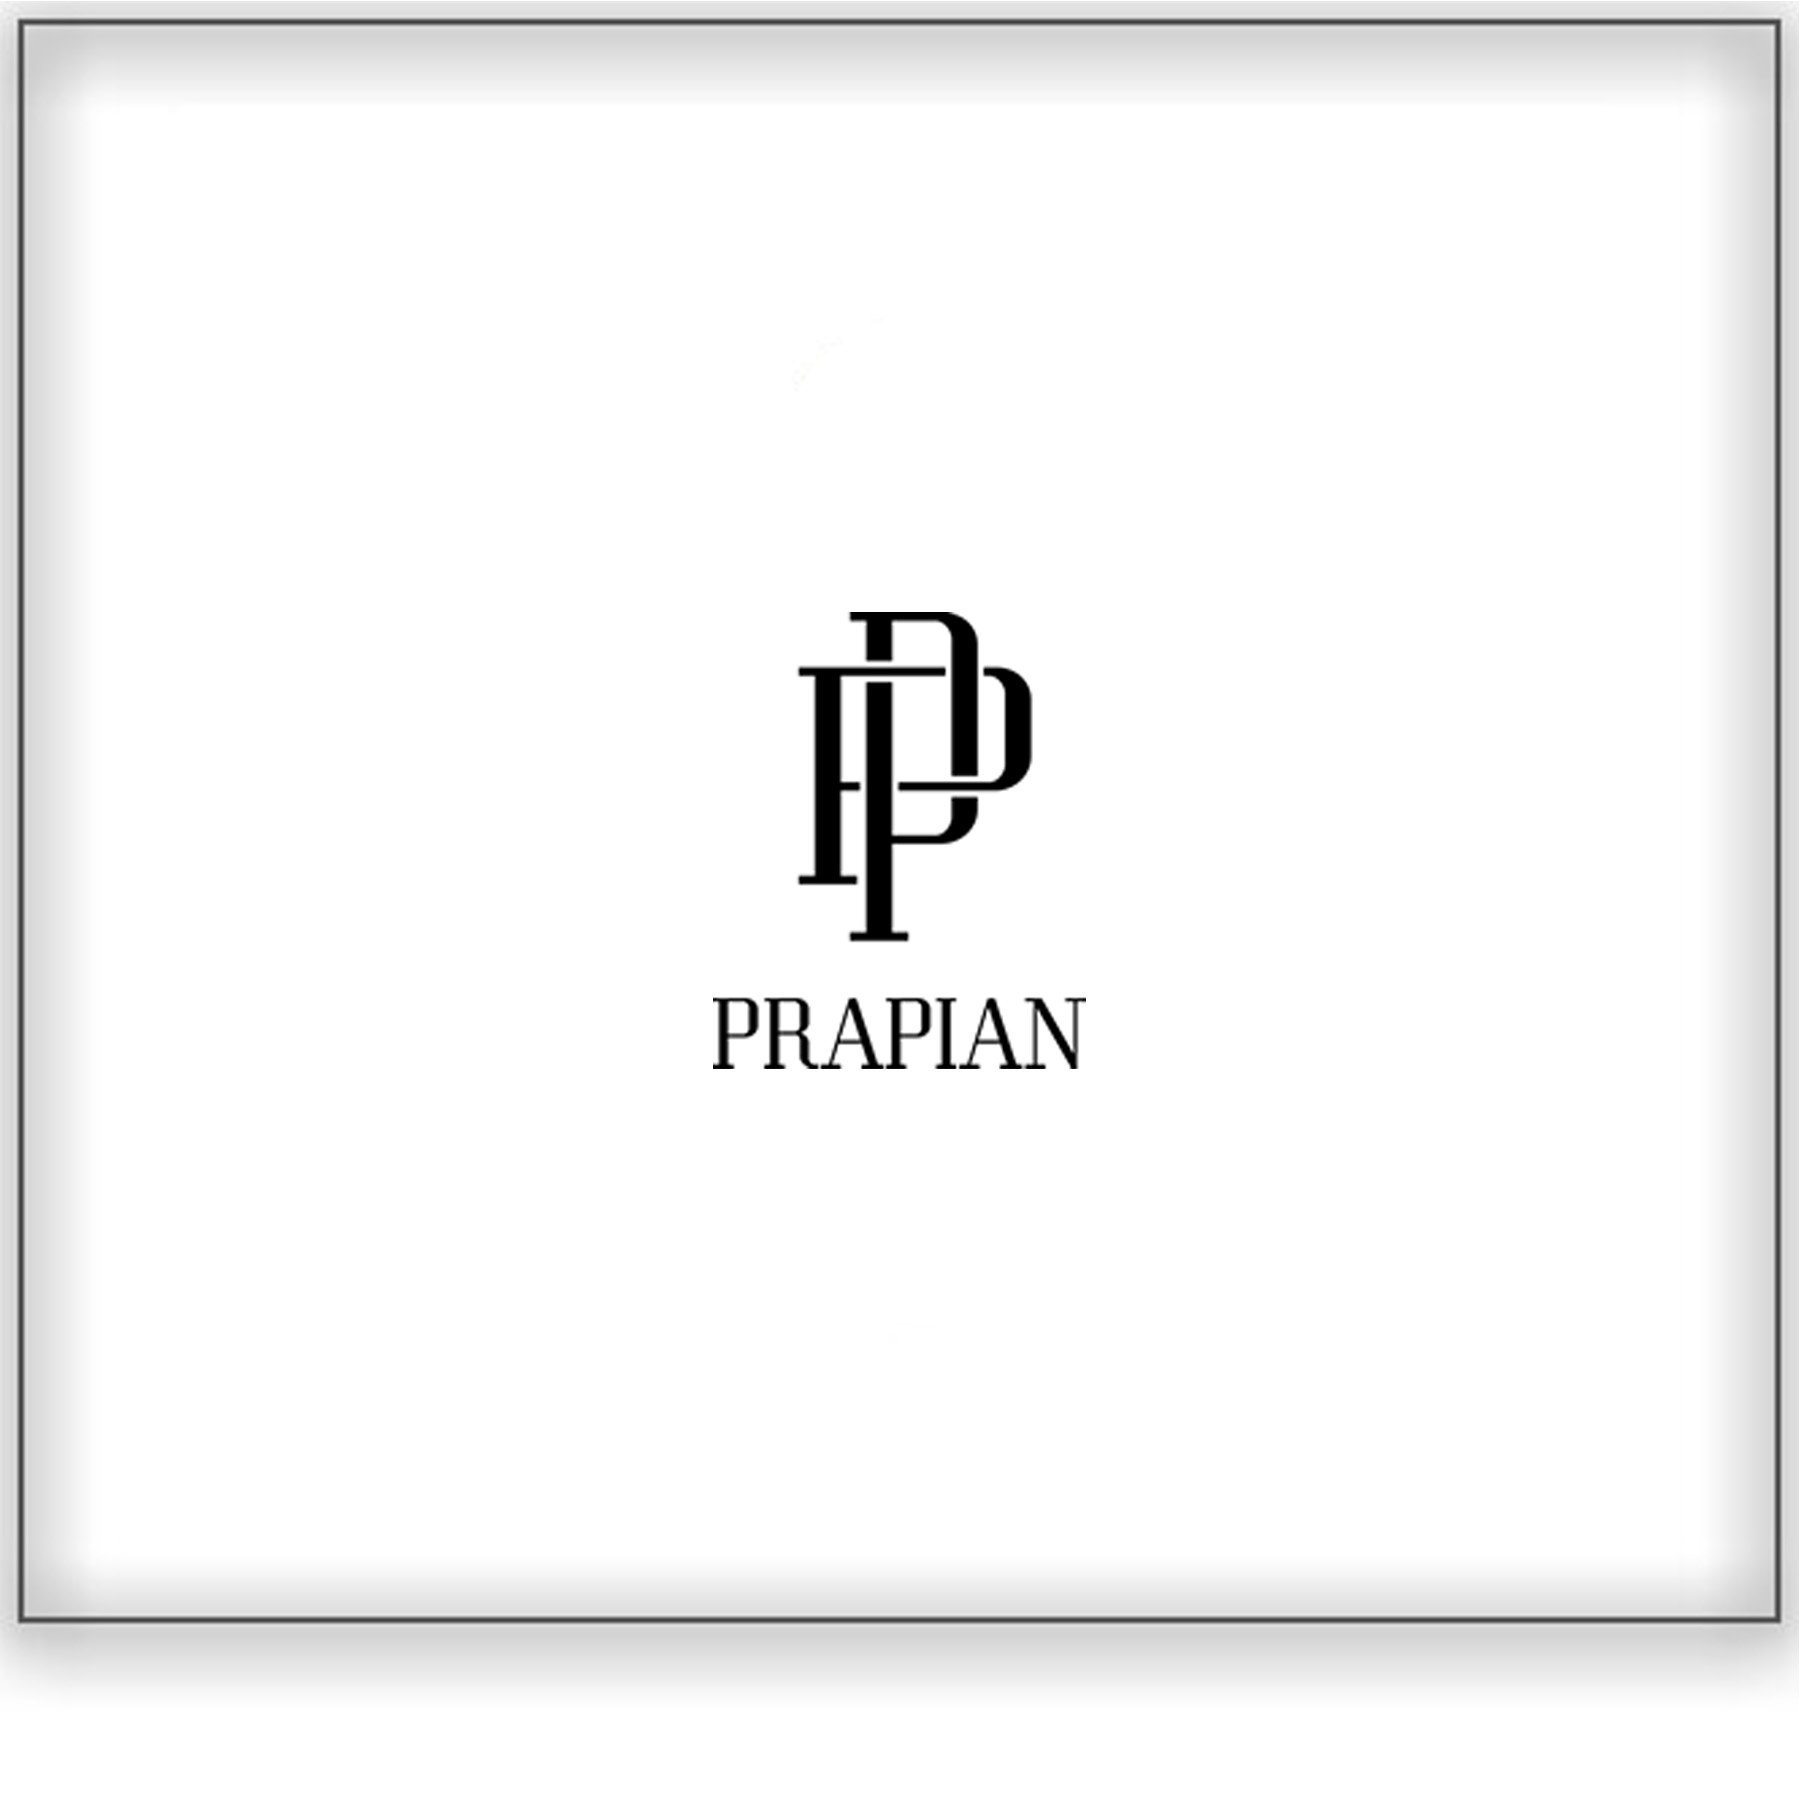 Prapian Estate&lt;a href=/prapian-estate&gt;Treviso, Italy ➤&lt;/a&gt;